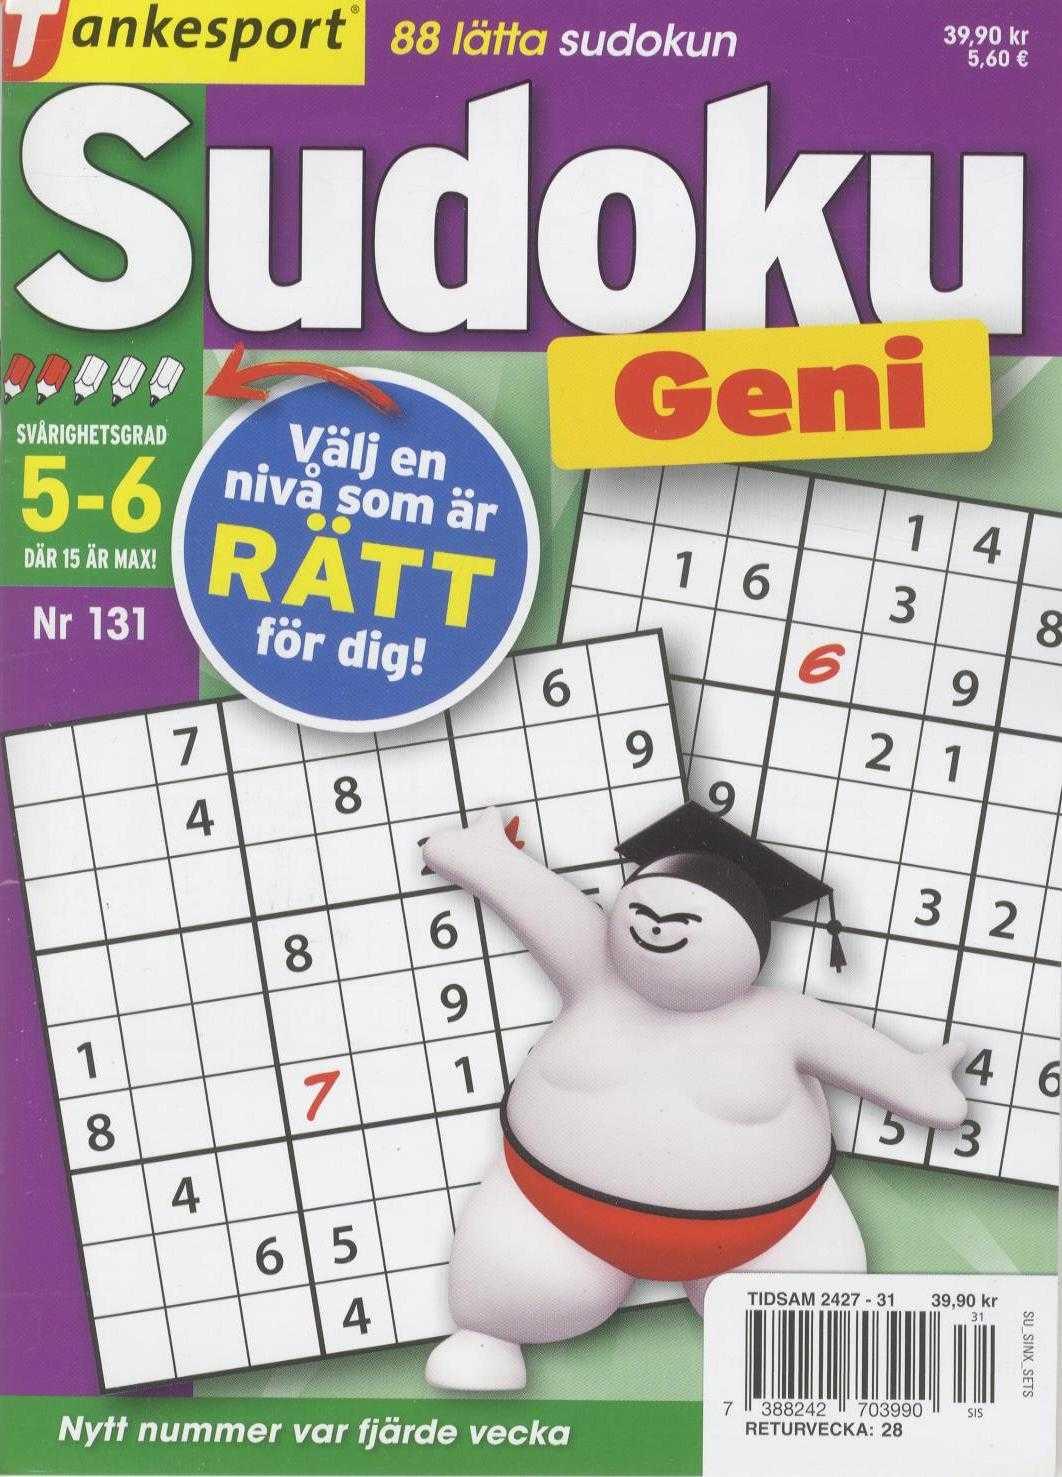 TS Sudoku Geni